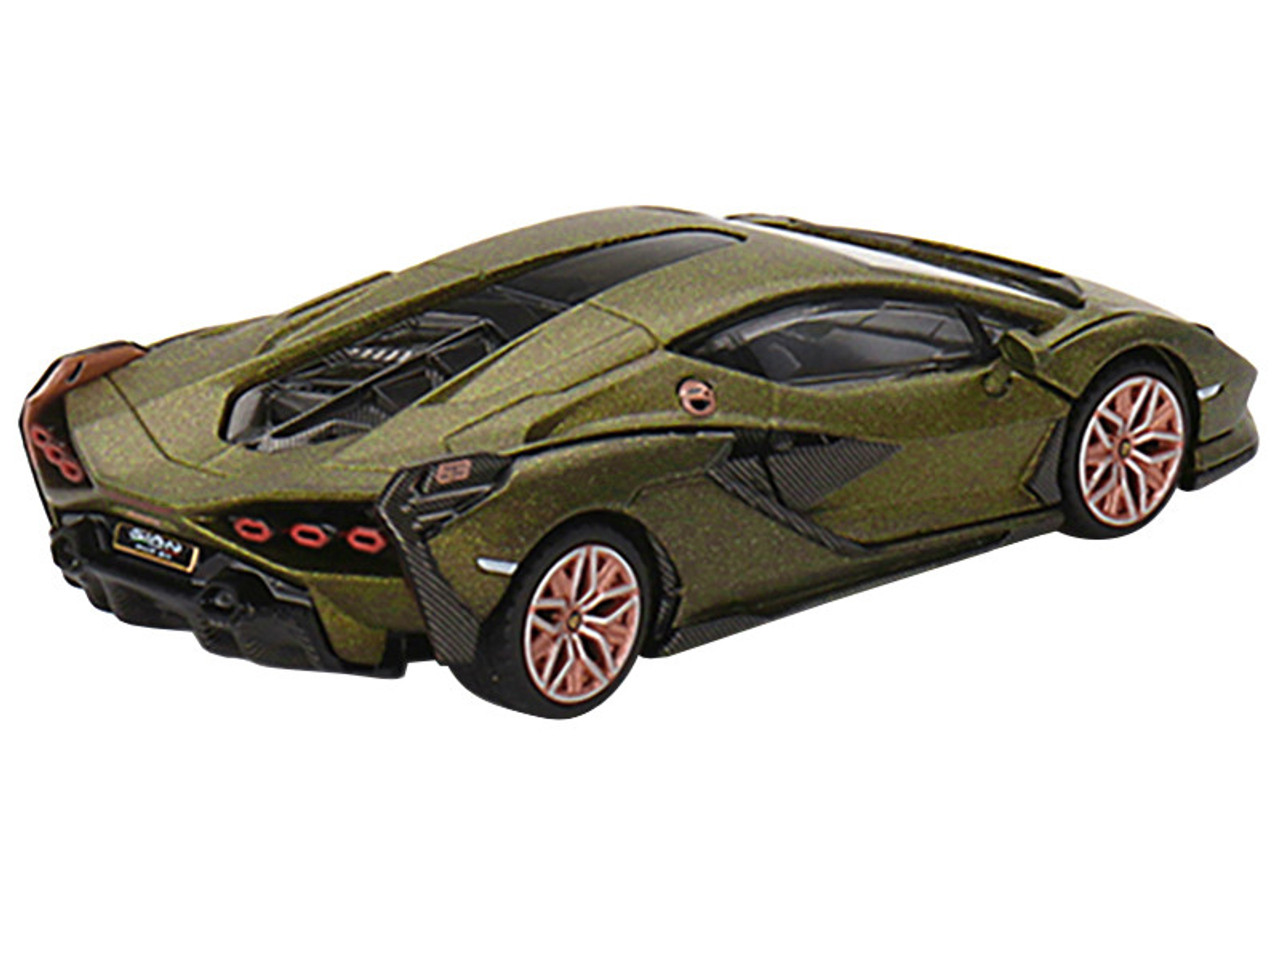 Lamborghini Sian FKP 37 "Presentation Edition" Matt Green Metallic Limited Edition to 4800 pieces Worldwide 1/64 Diecast Model Car by True Scale Miniatures